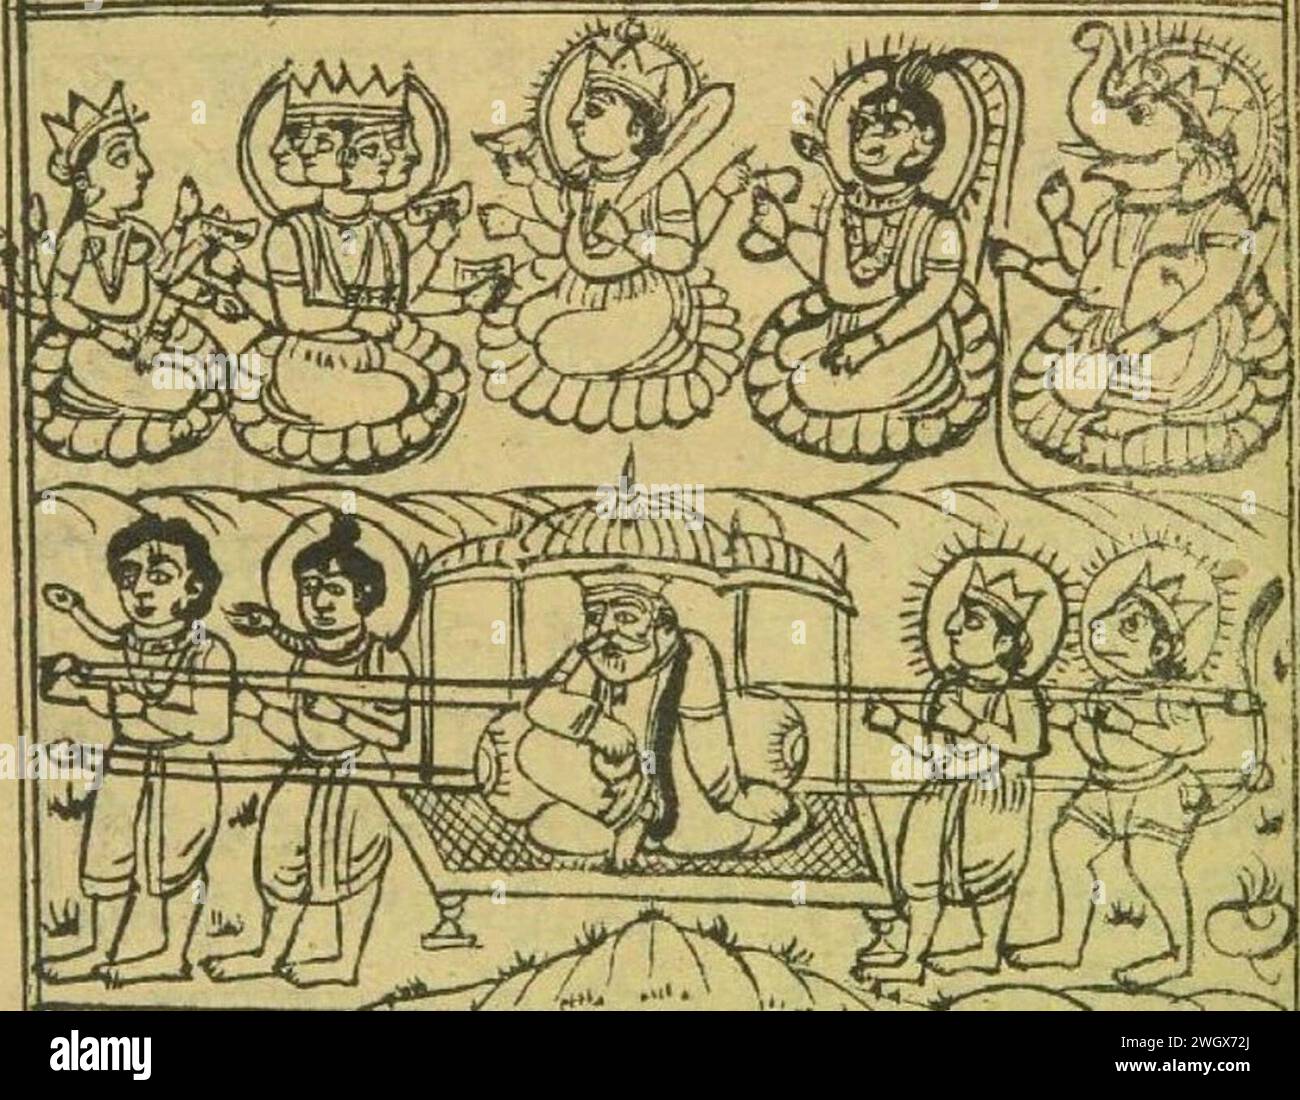 Opera d'arte tratta da un foglio di un manoscritto Janamsakhi che raffigura Guru Nanak trasportato a Sachkhand (regno celeste) da divinità indiane, mentre altre divinità sopra venerano Guru Nanak. Foto Stock